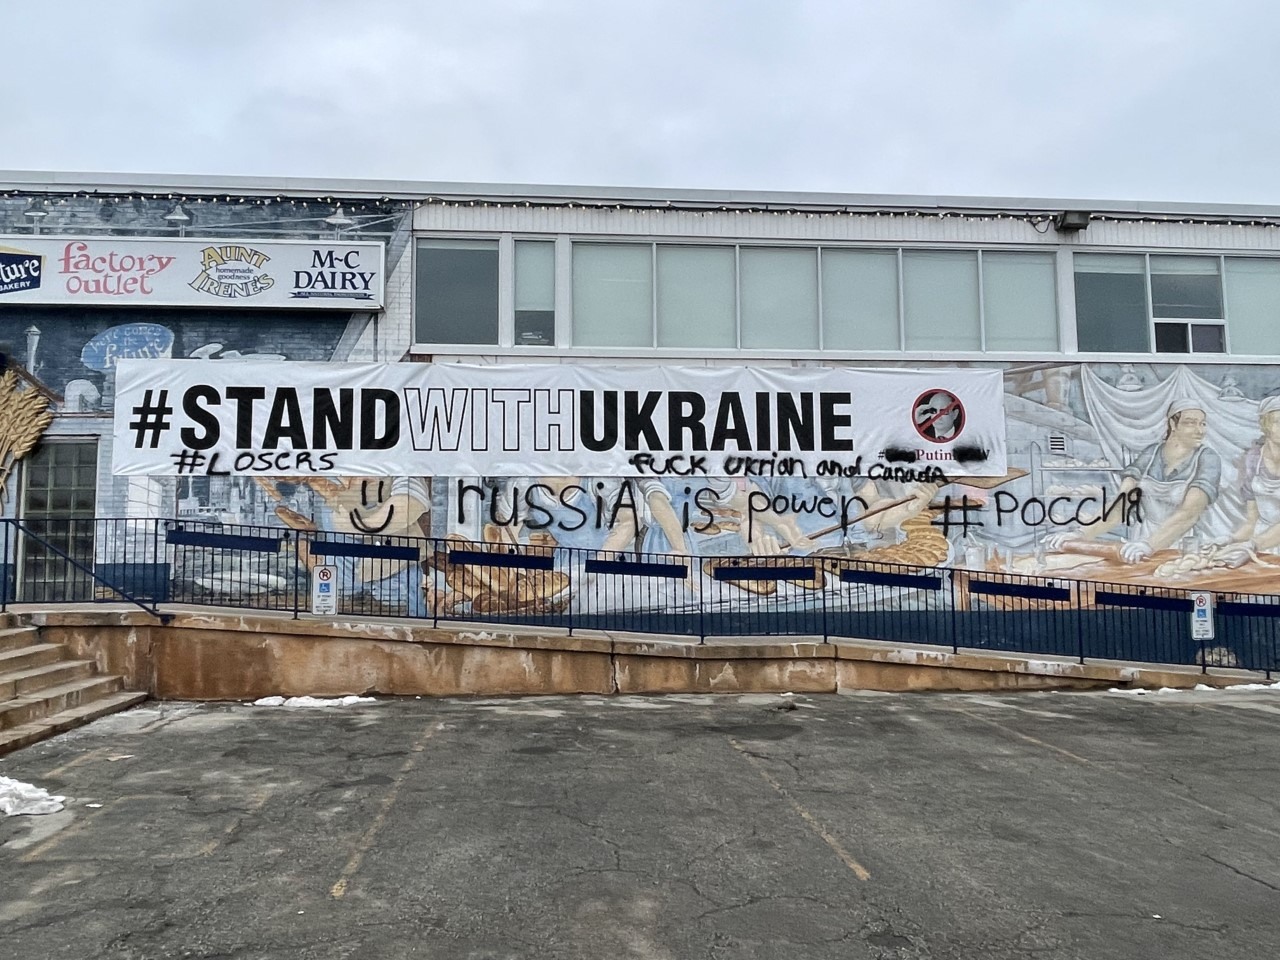 Ukrainian bakery in Toronto vandalized with anti-Ukrainian graffiti